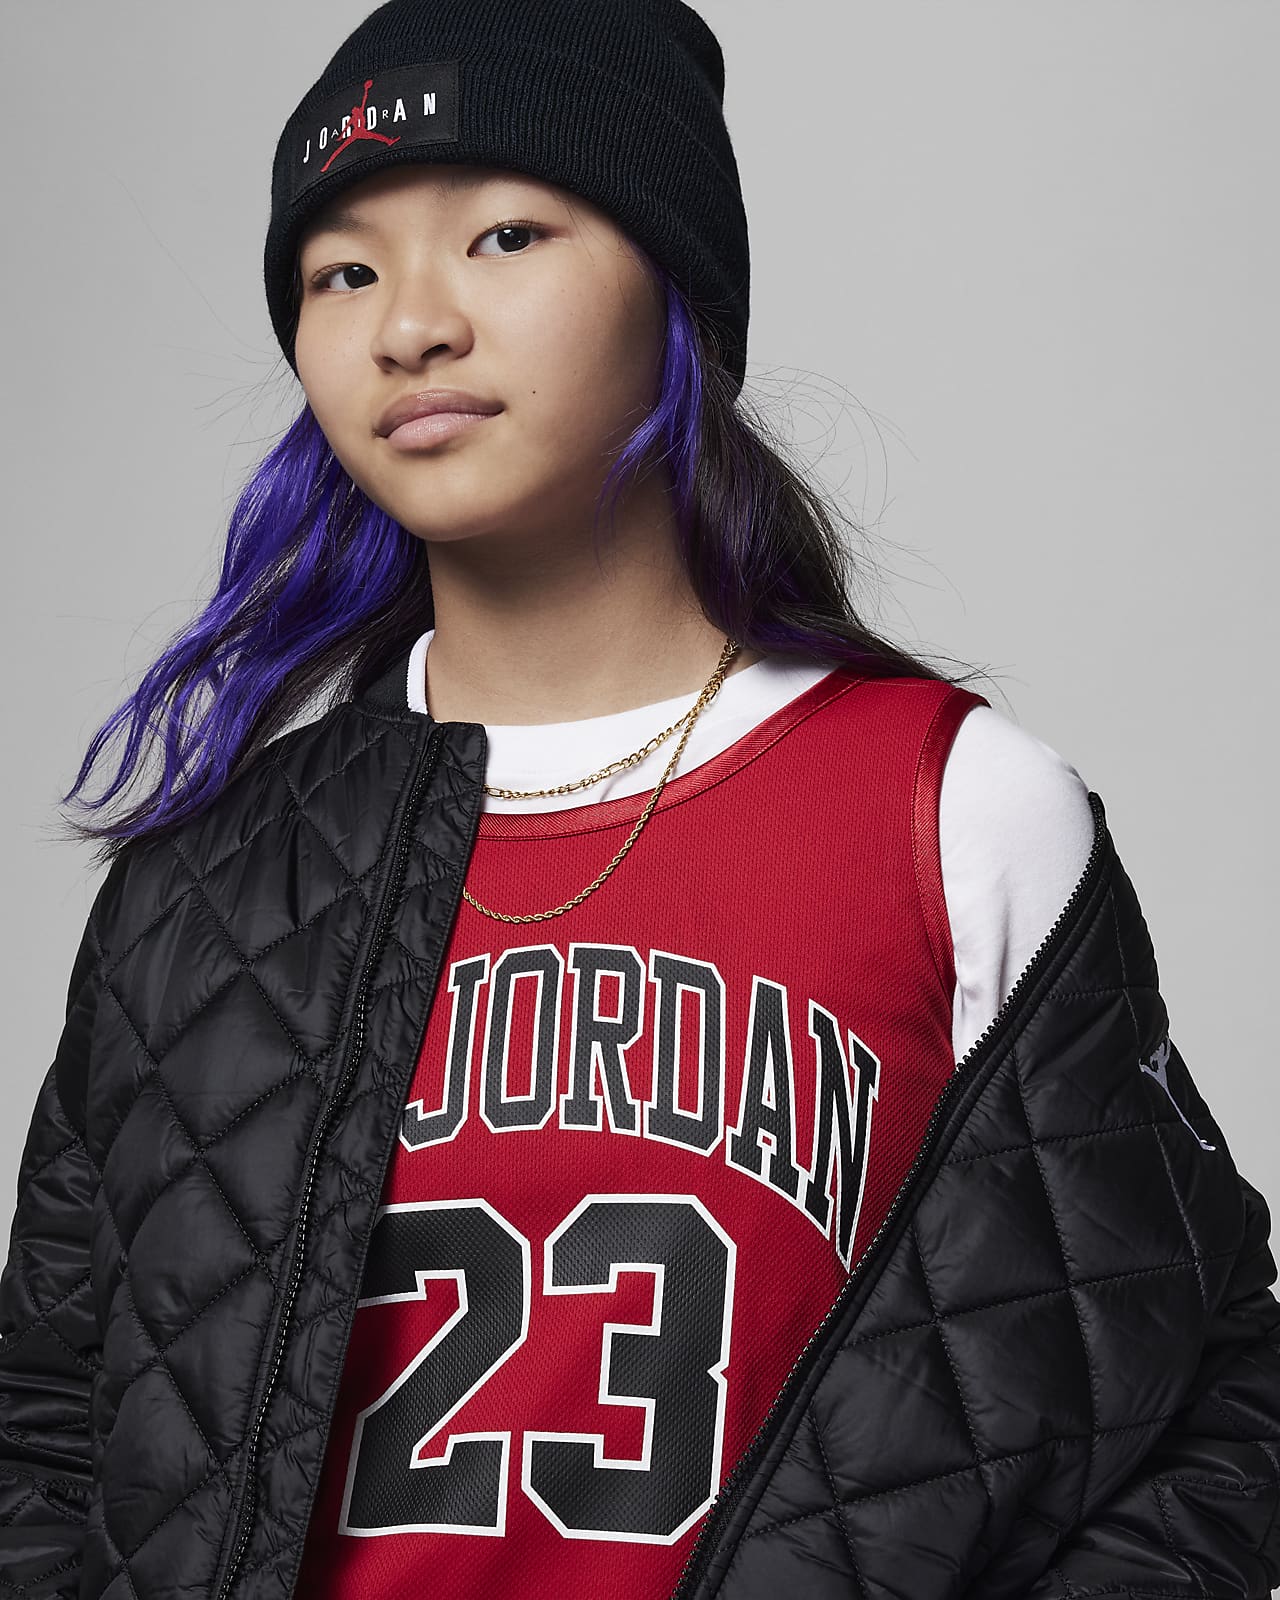 Jordan Jersey Dress for Girls (6-16 Years) - Red - 45B320-R78